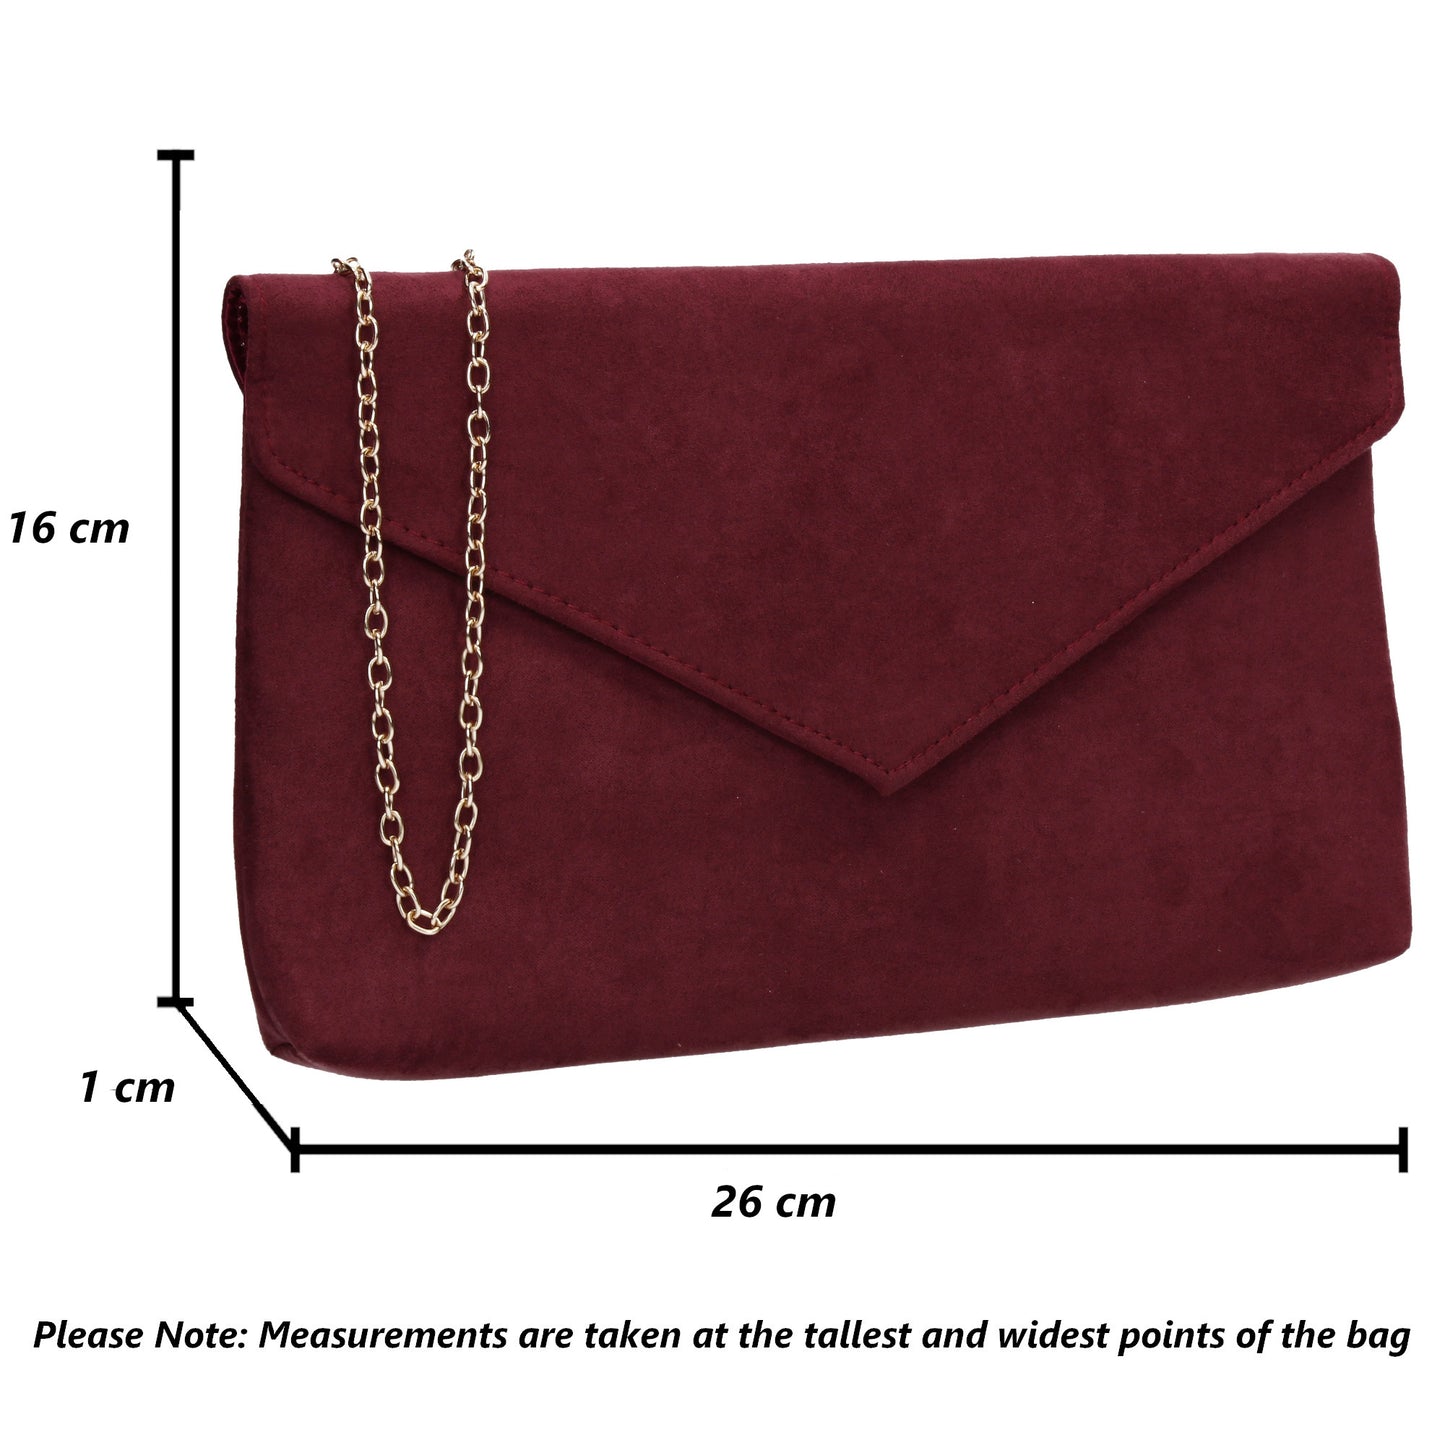 SWANKYSWANS Rosa Clutch Bag Burgundy Cute Cheap Clutch Bag For Weddings School and Work